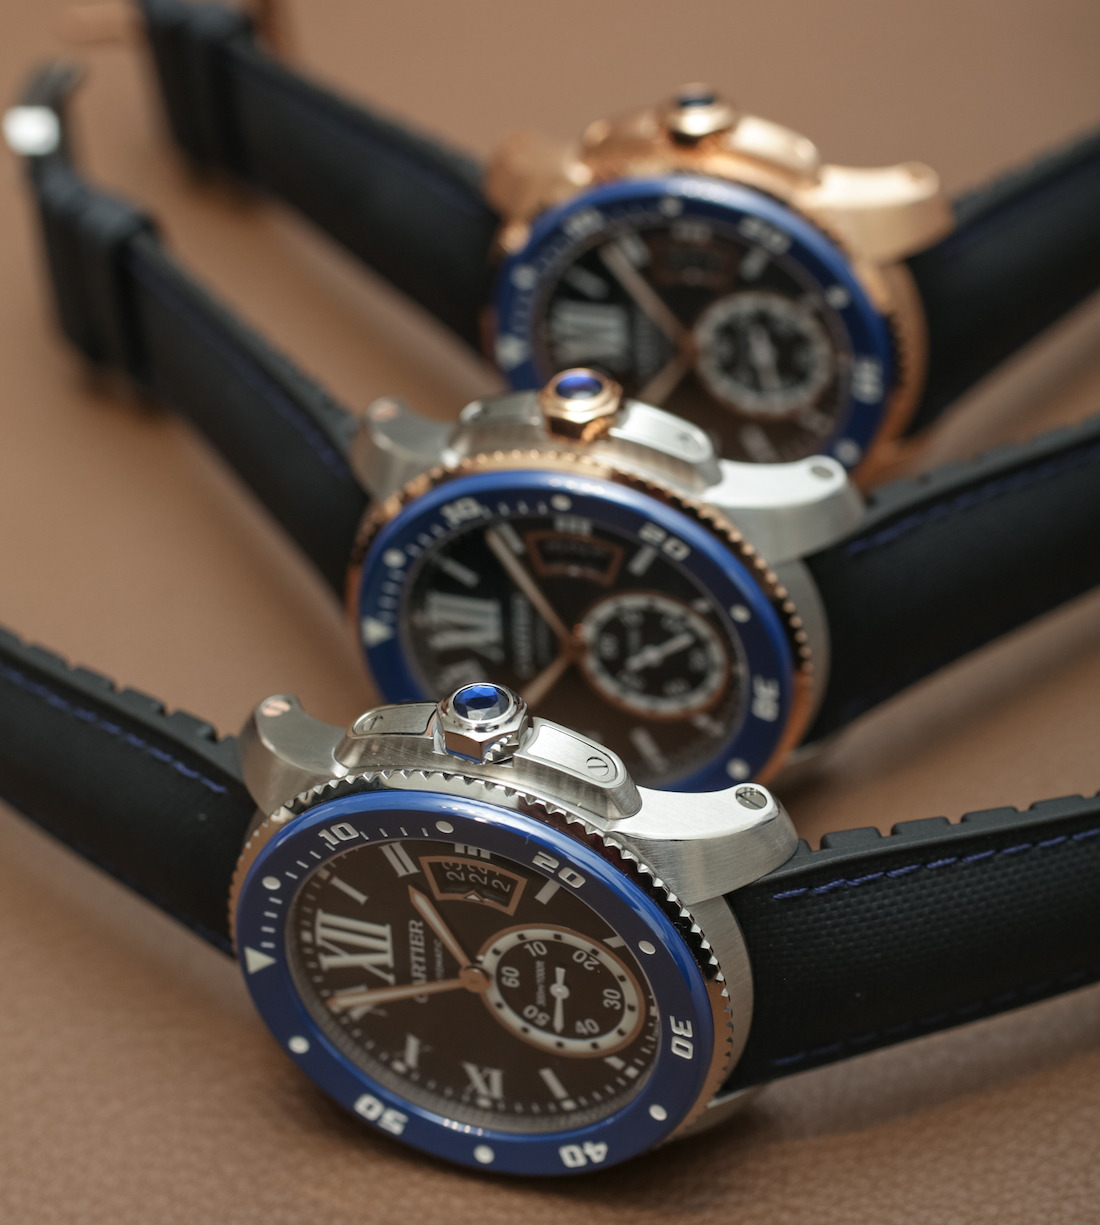 Cartier Calibre De Cartier Diver Blue Watch Hands-On Hands-On 